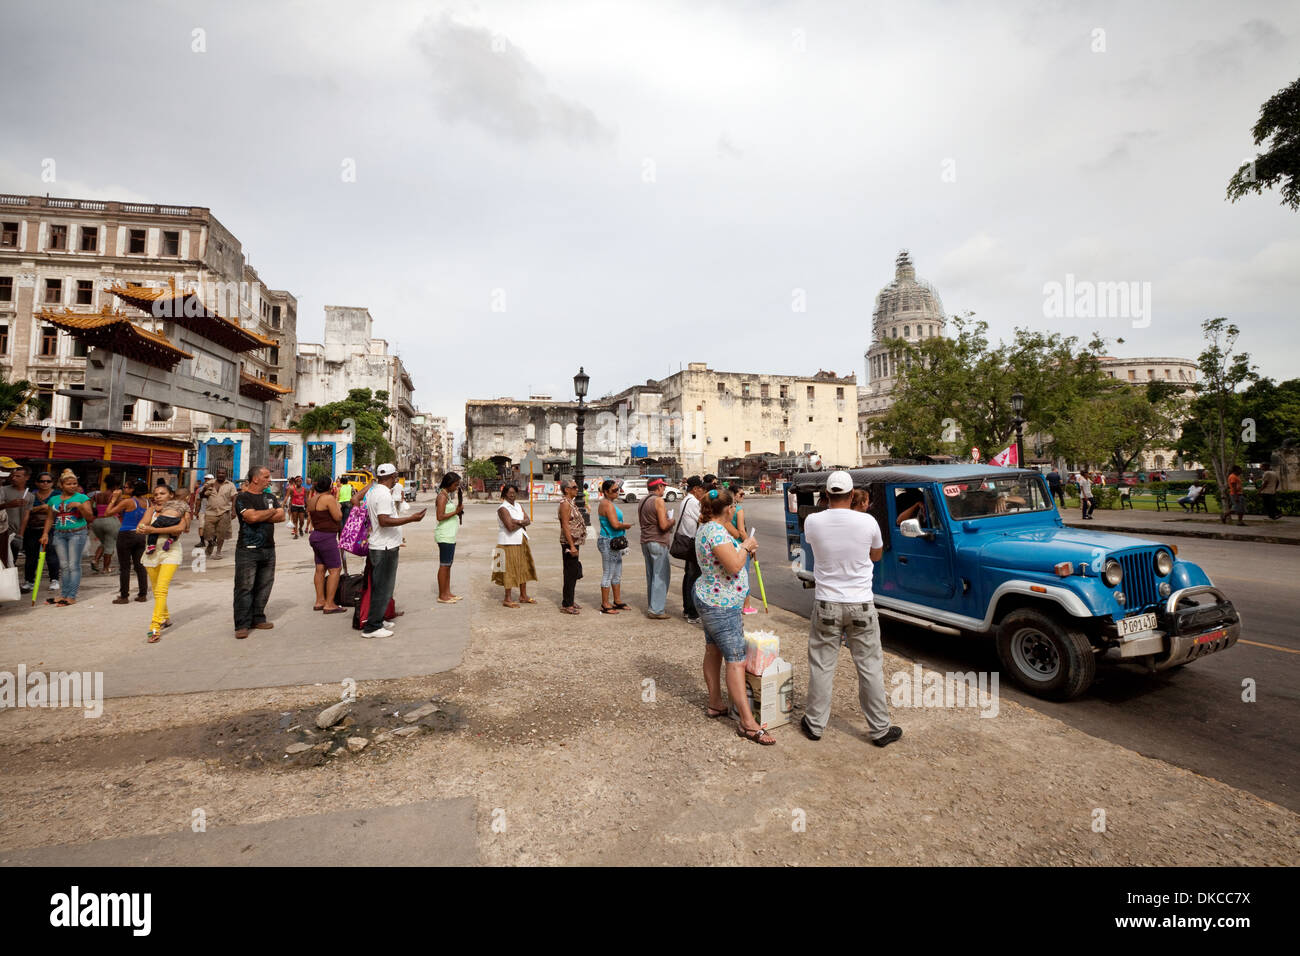 Taxi queue, people queuing for a taxi, Havana Cuba Caribbean Stock Photo